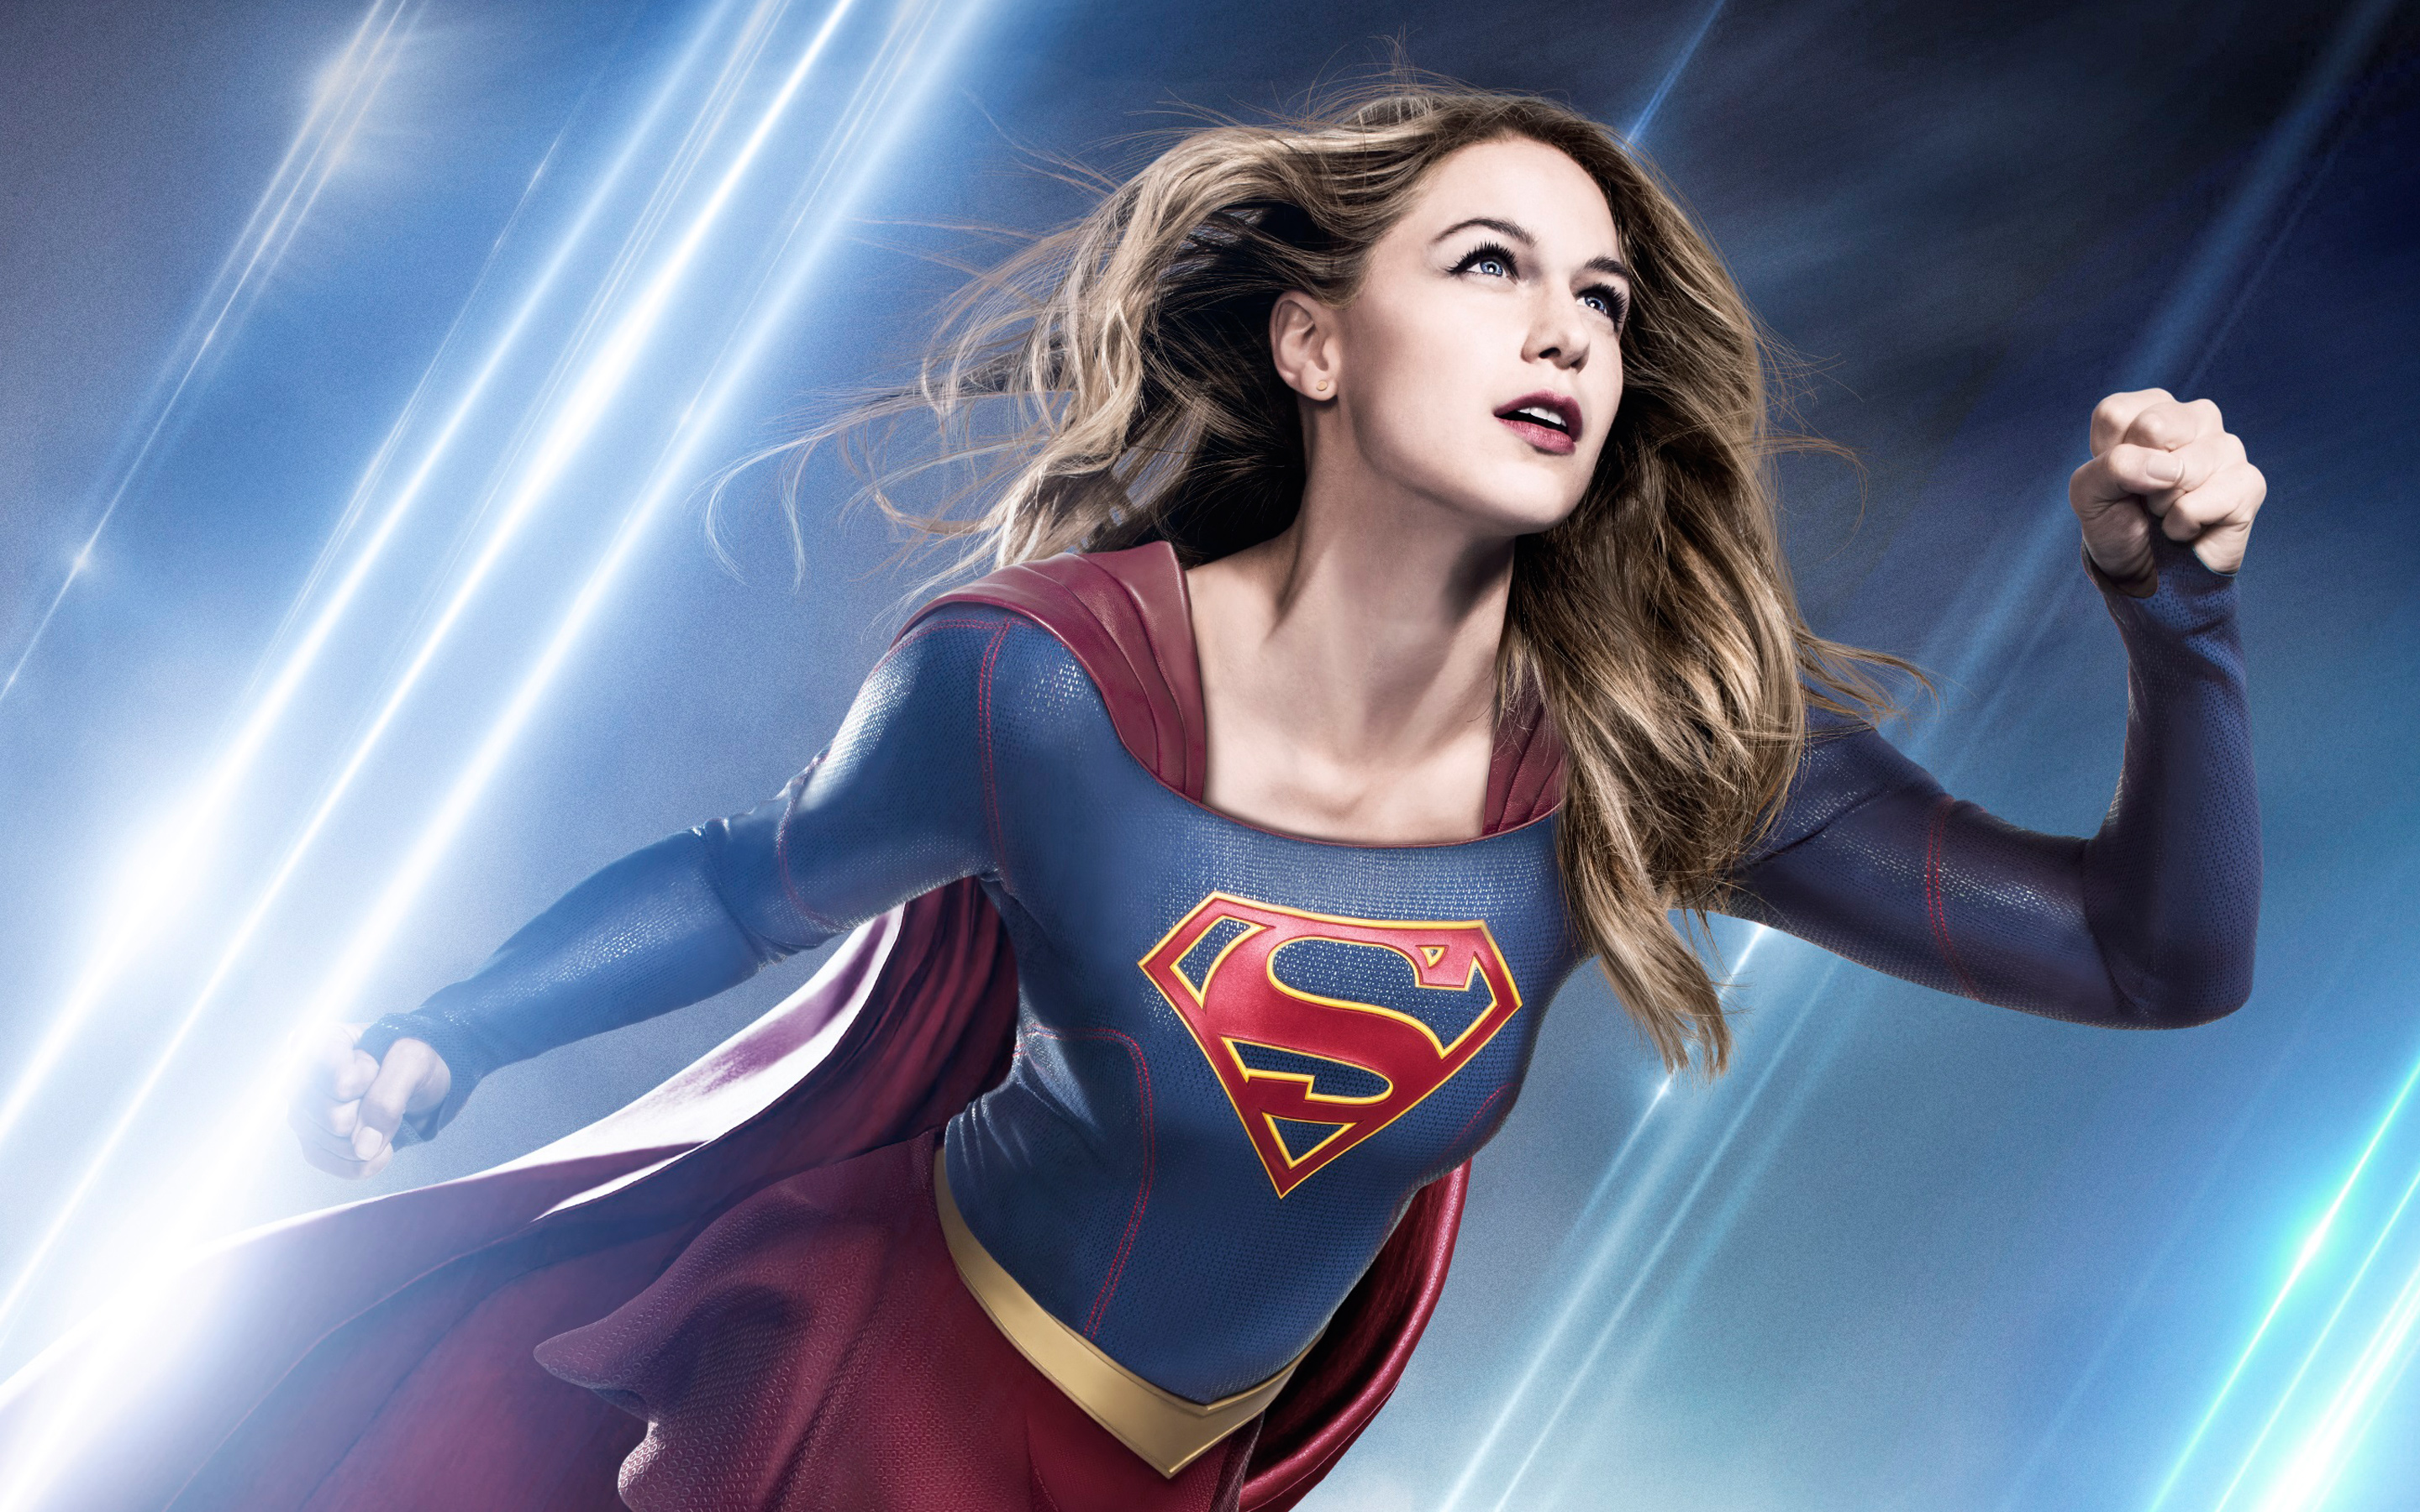 People 2880x1800 Melissa Benoist actress women Supergirl digital art